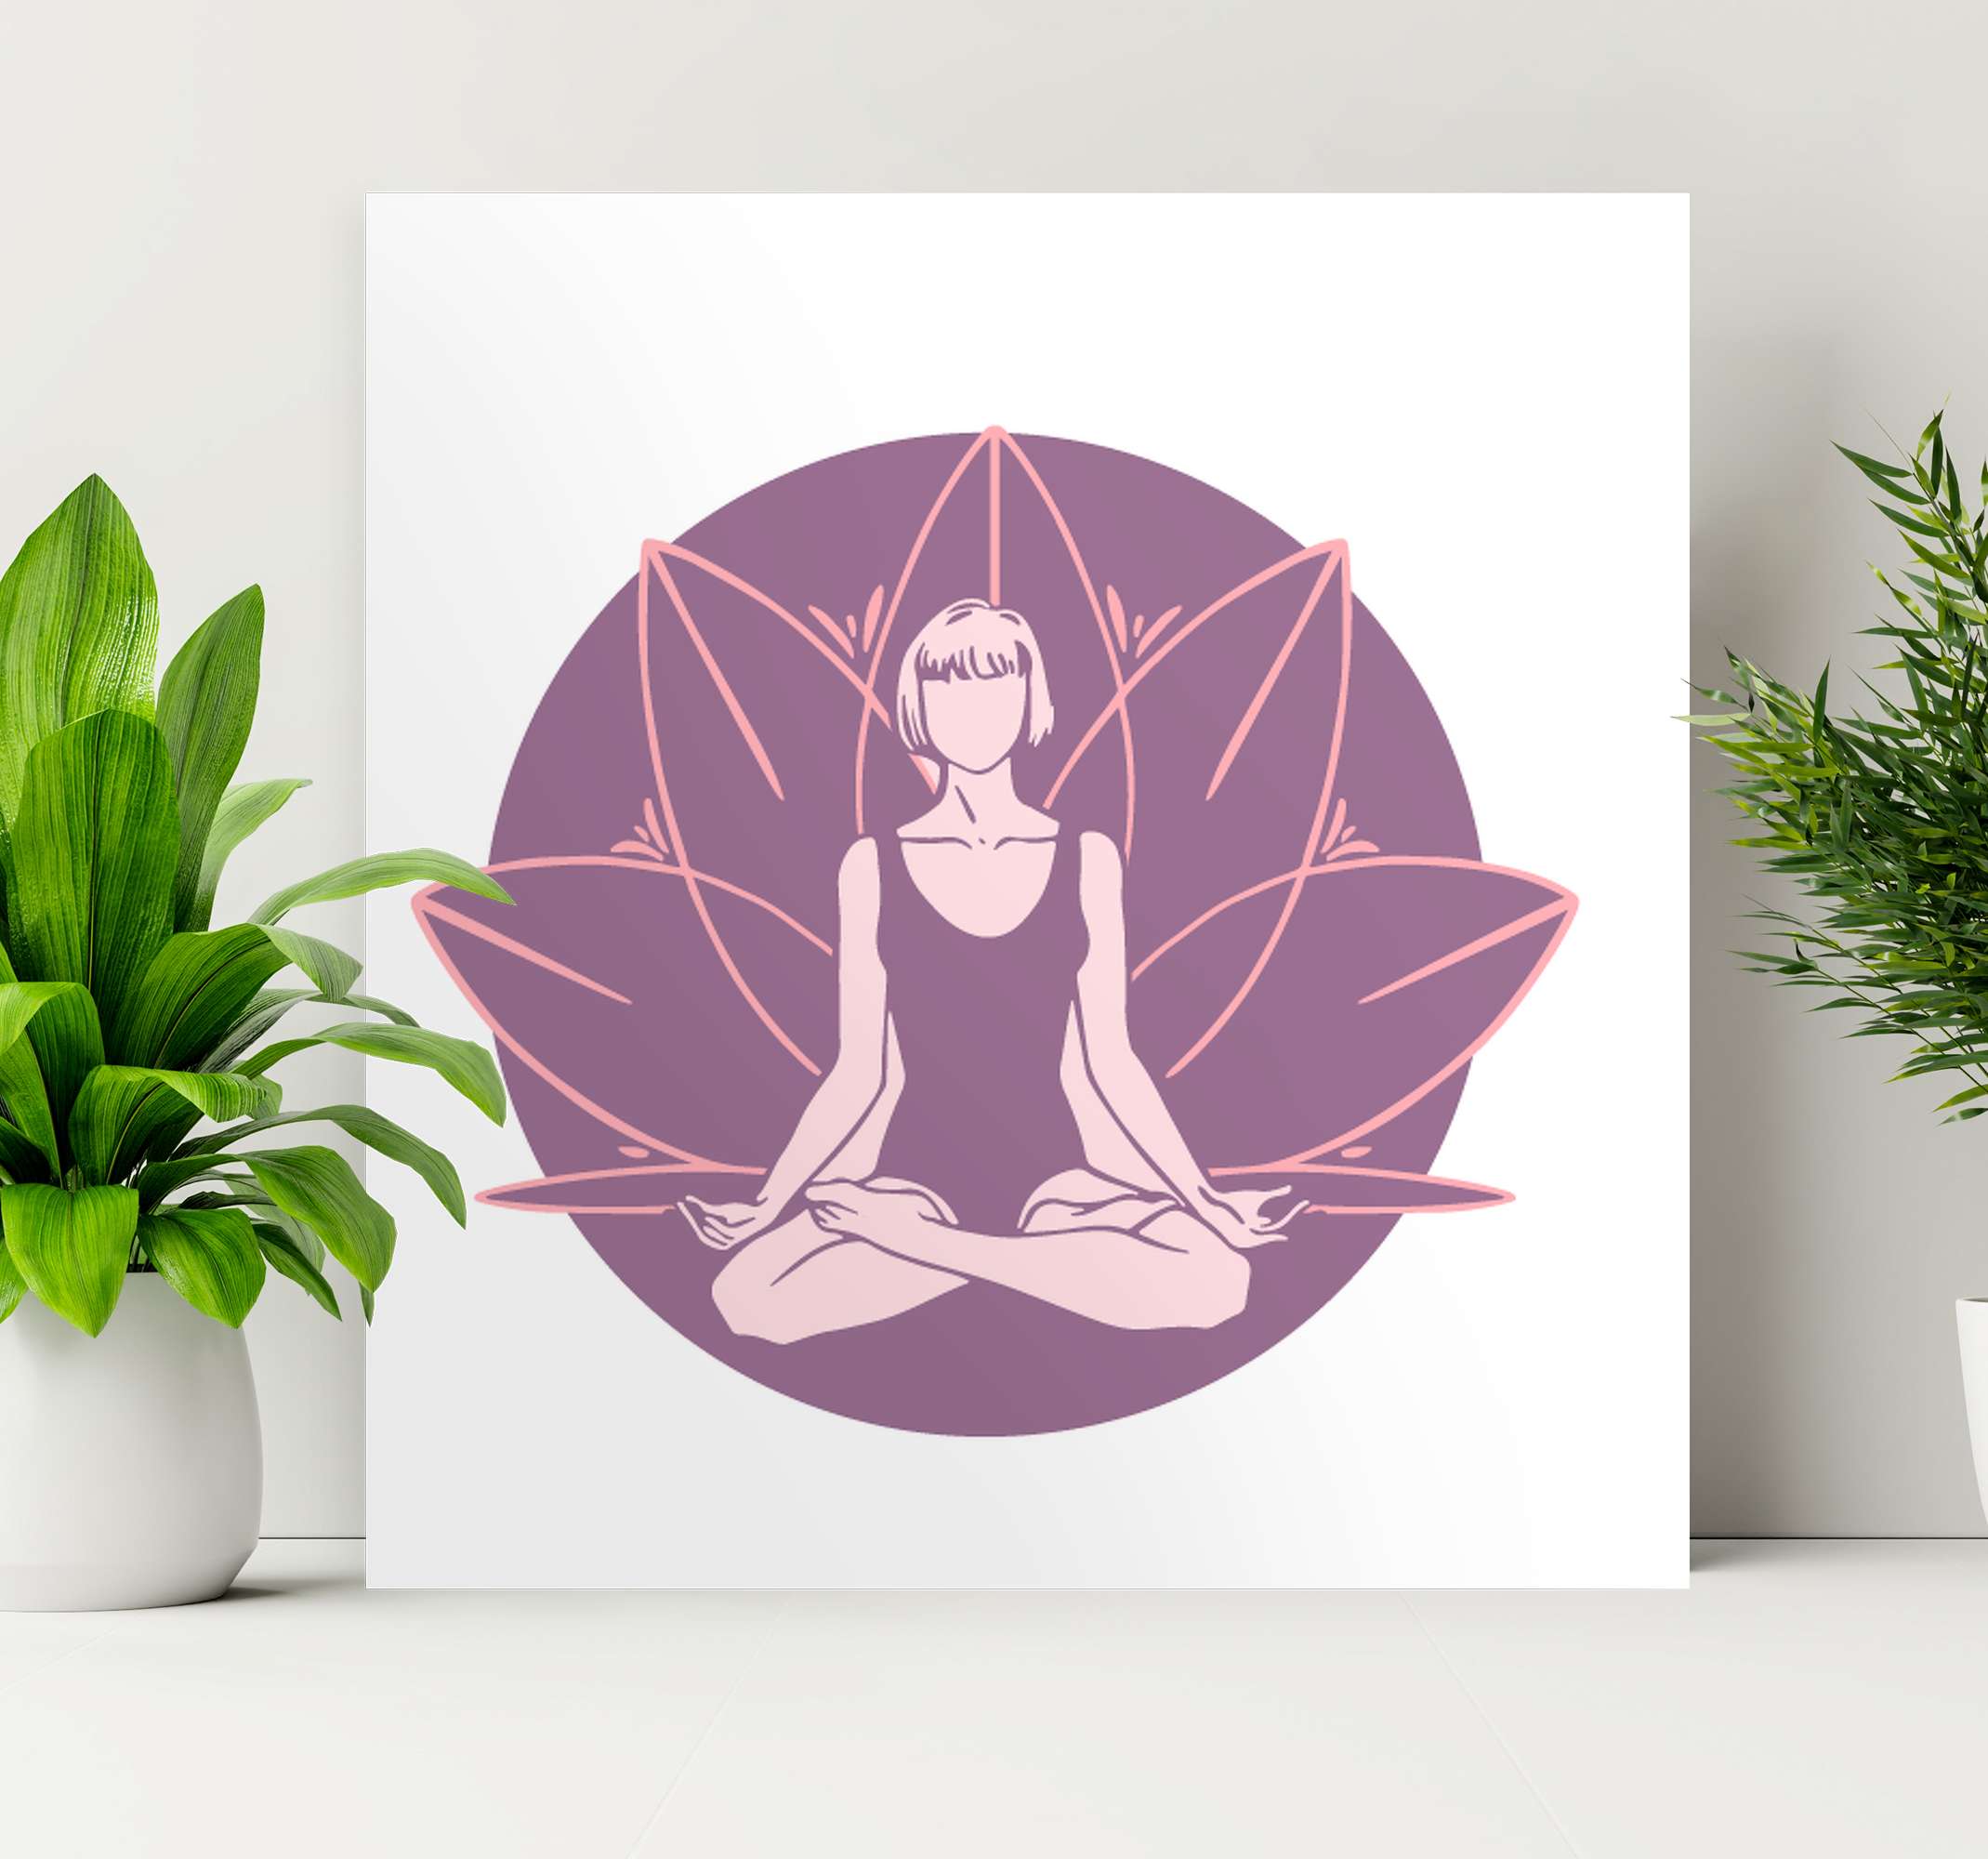 Lotus flower meditation art canvas art